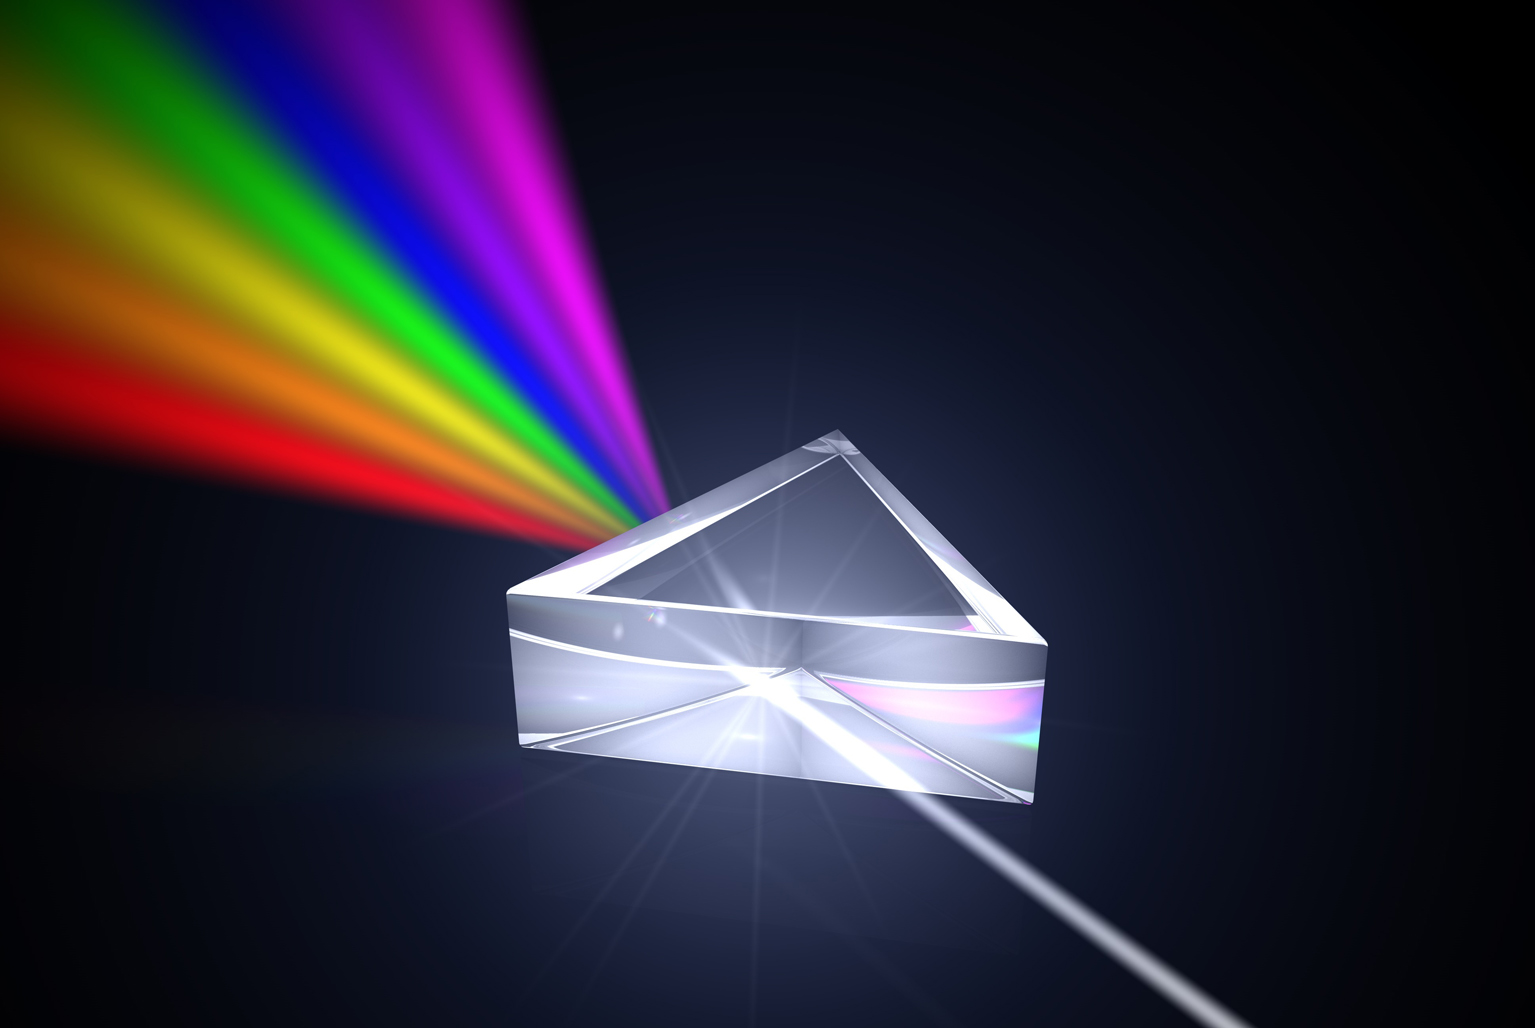 light-split-into-spectrum-by-prism.jpg